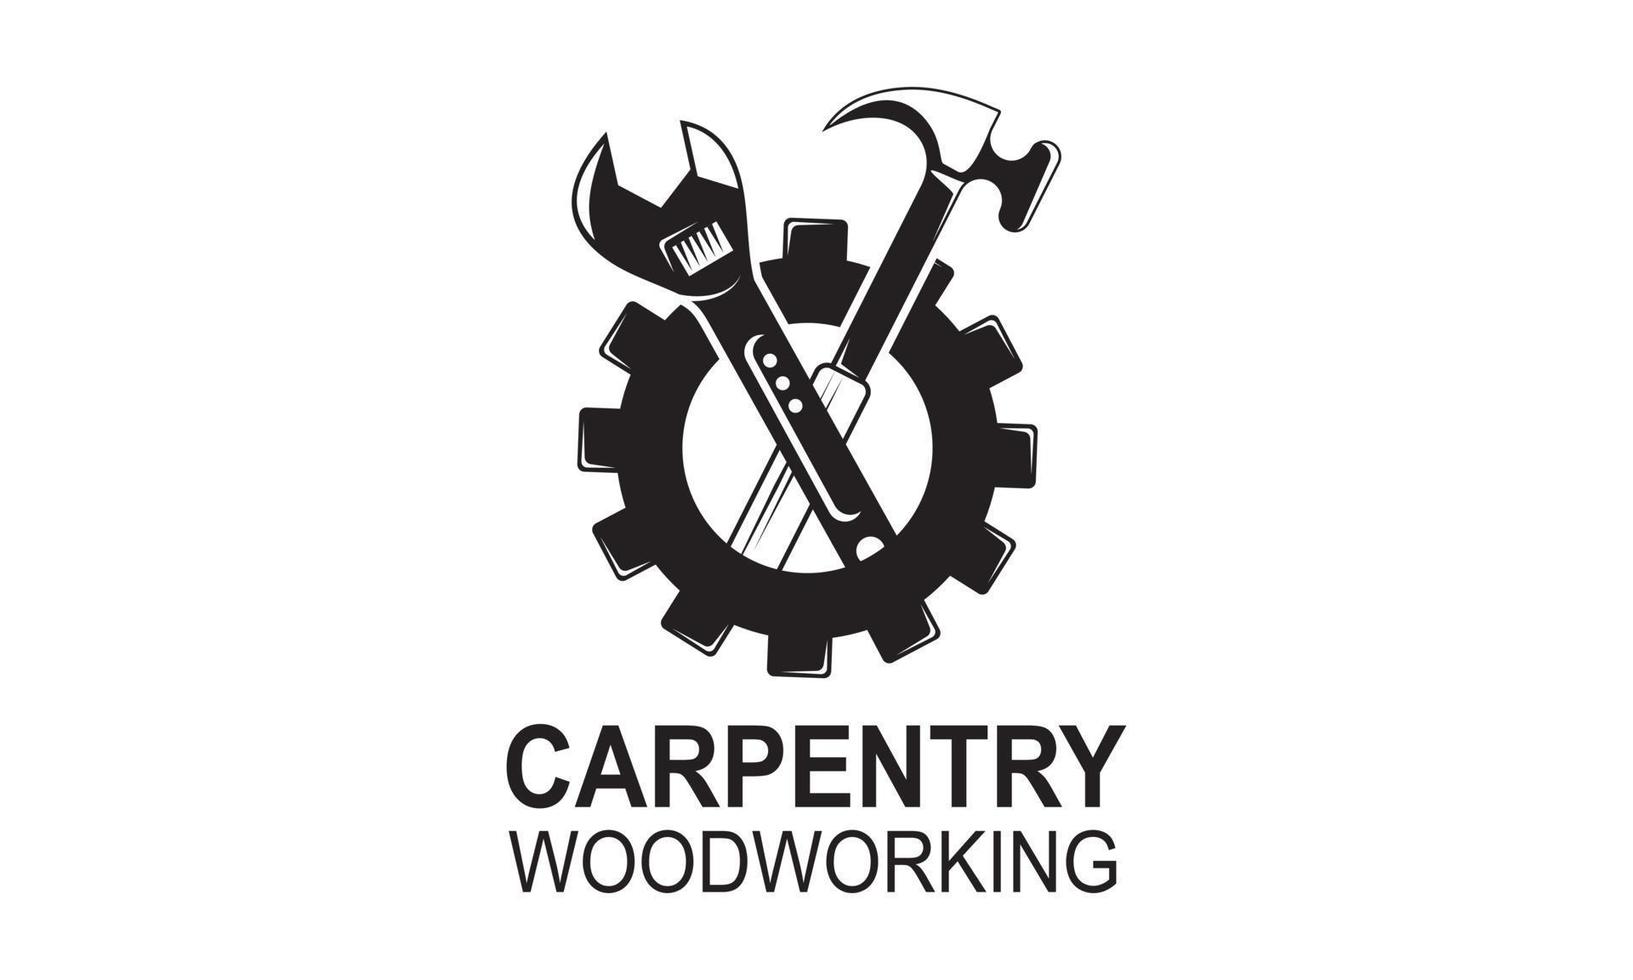 taller de carpintería y carpintería vector logo